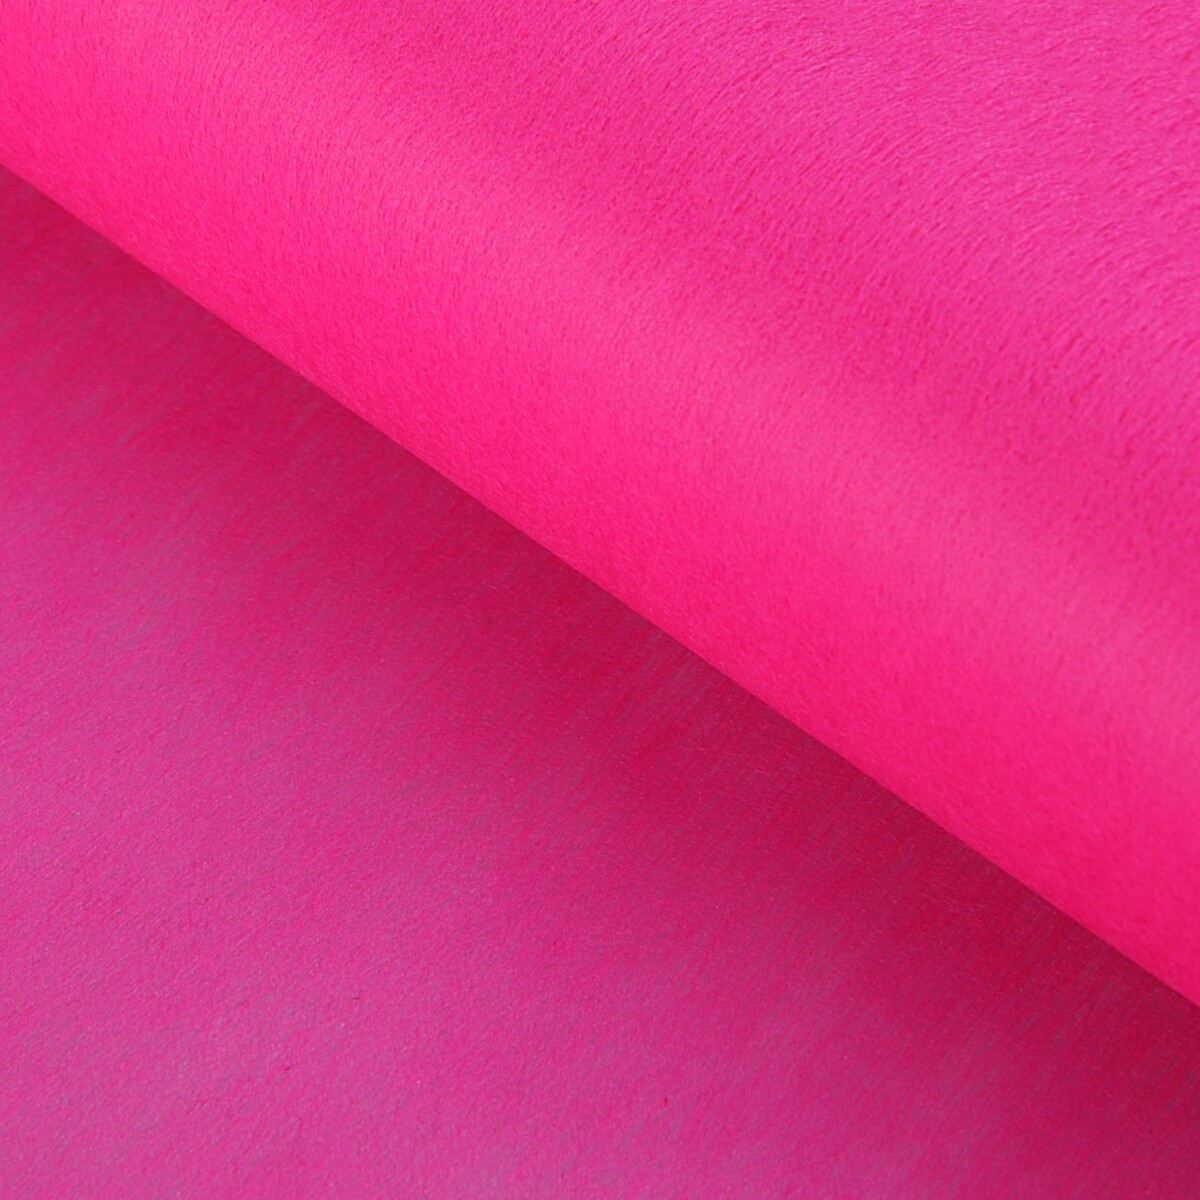 Фетр для упаковок и поделок, однотонный, ярко-розовый, однотонный, двусторонний, рулон 1шт., 50 см x 15 м фетр для декора и флористики однотонный бургундский красный рулон 1шт 50 см x 15 м